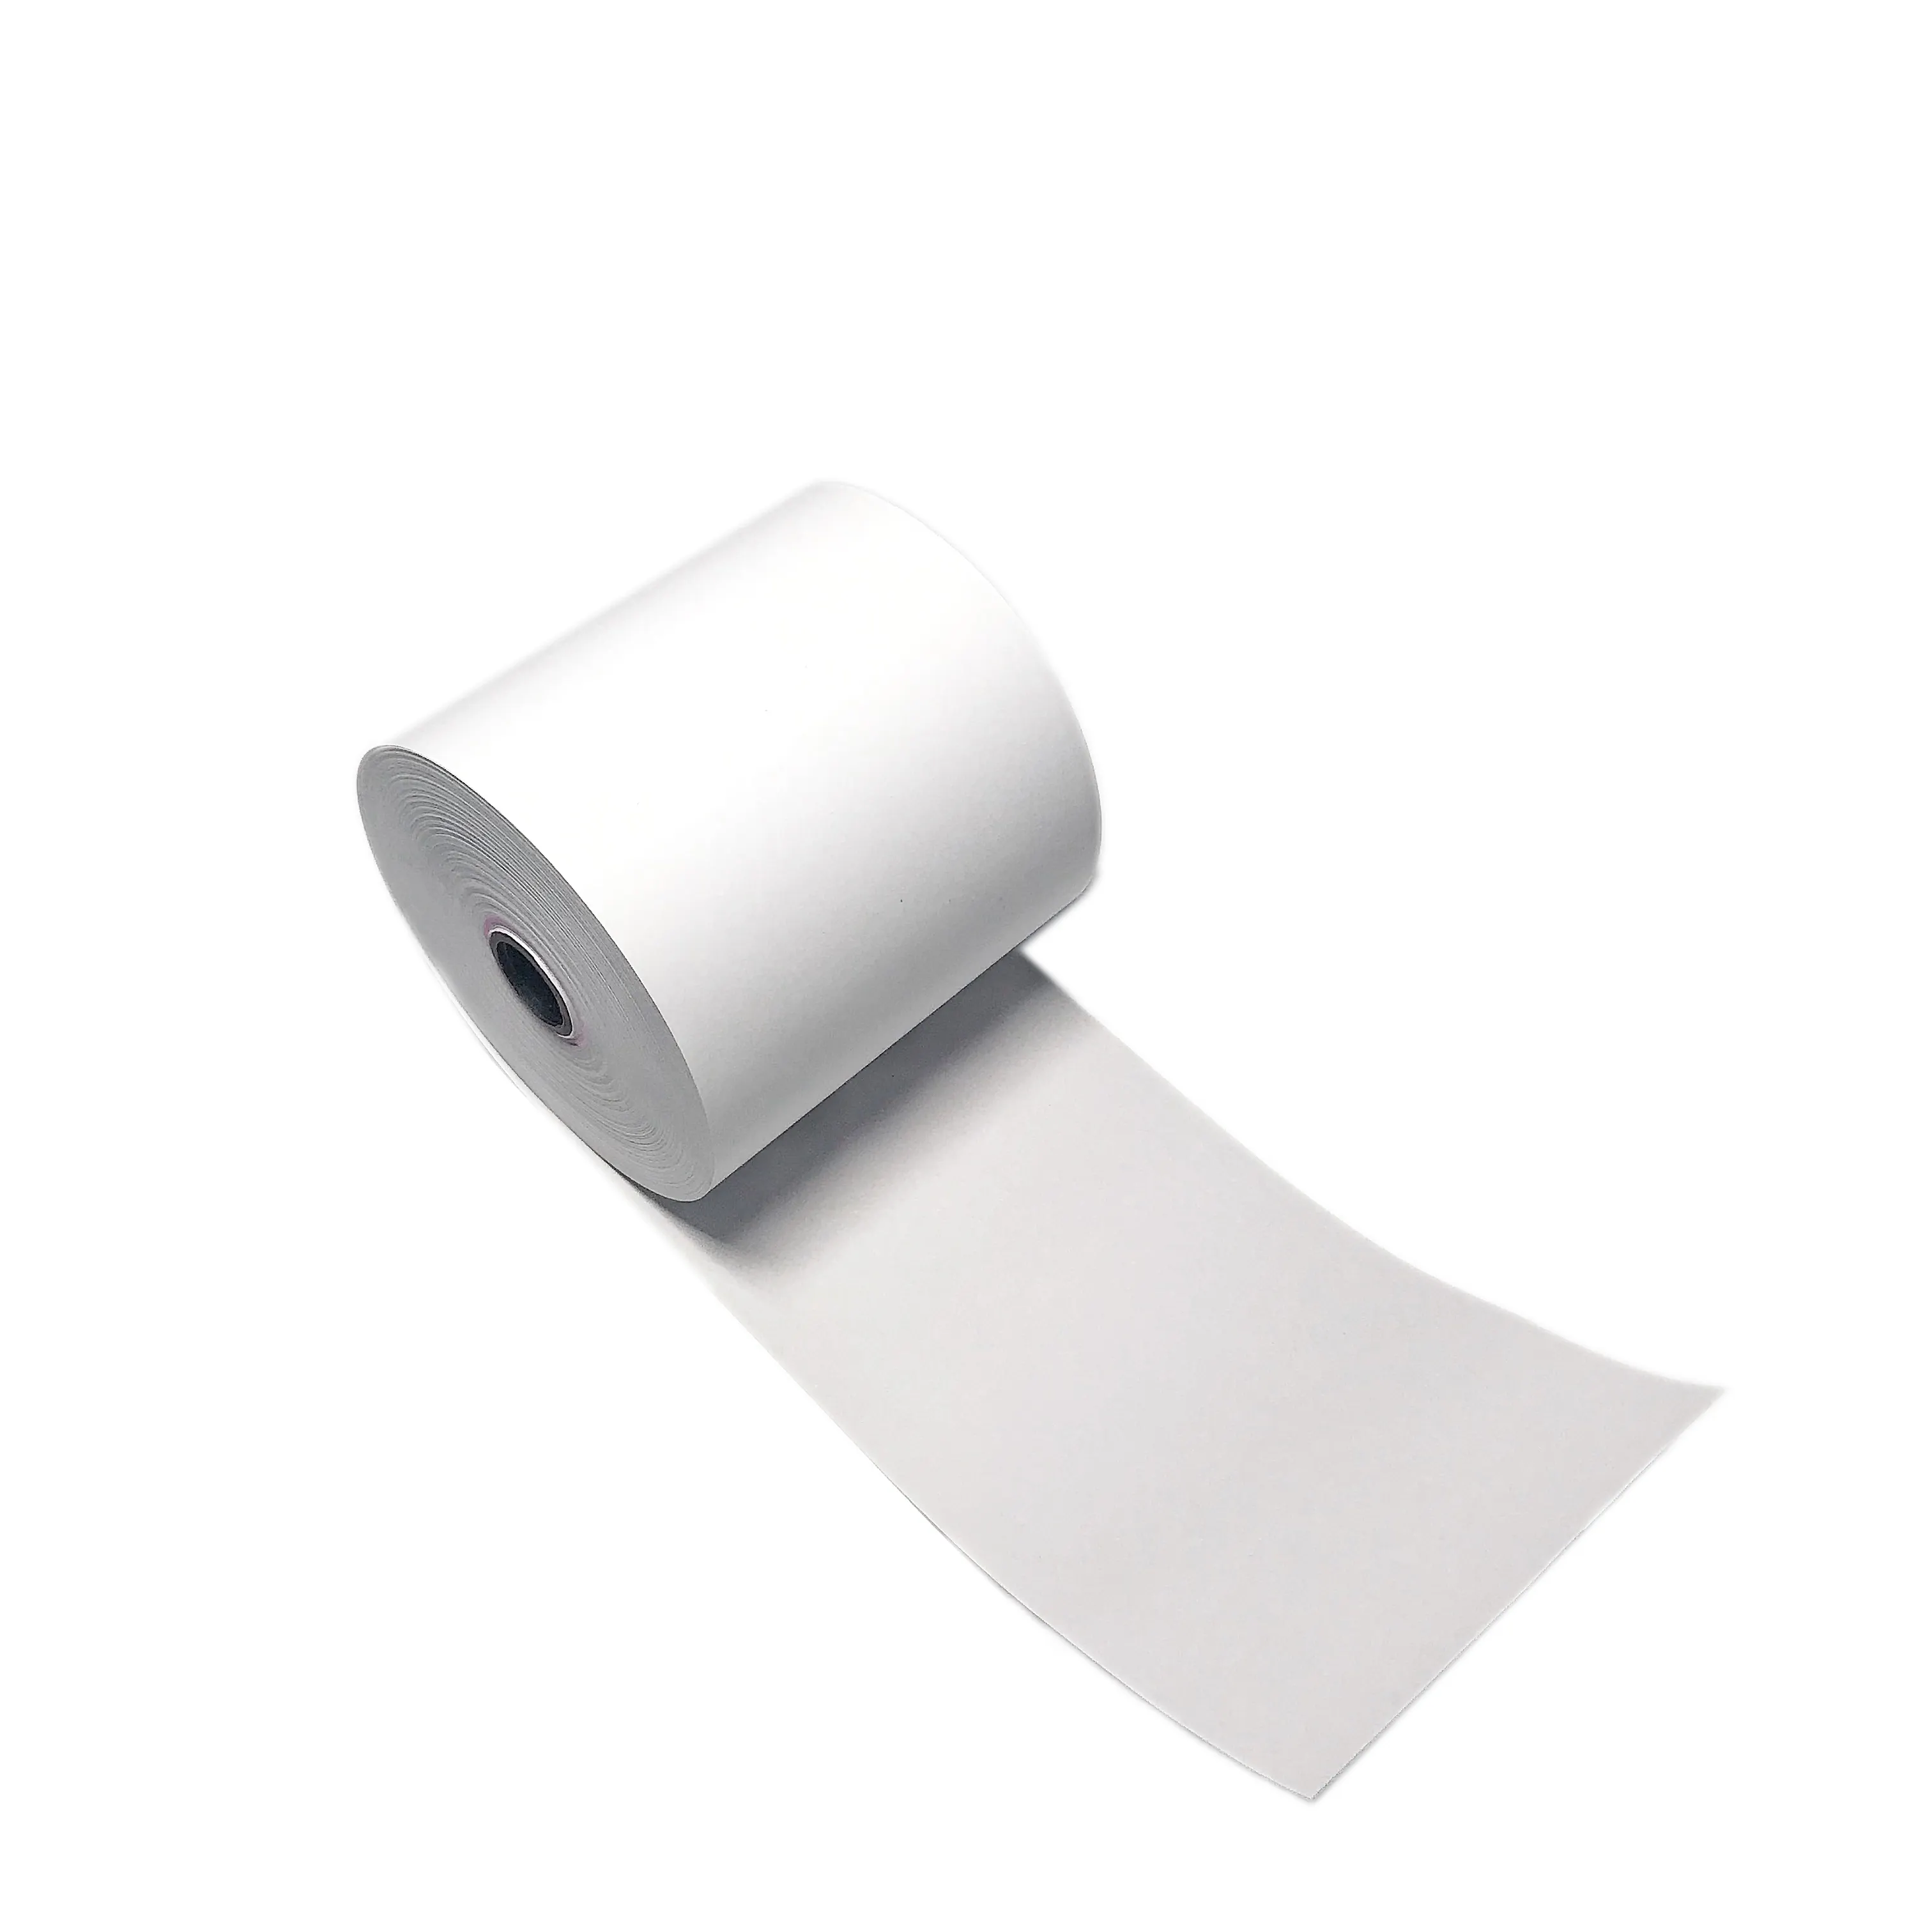 Fabrik OEM Pos Thermopapier Registrier kassen papier 58mm Thermopapier rolle